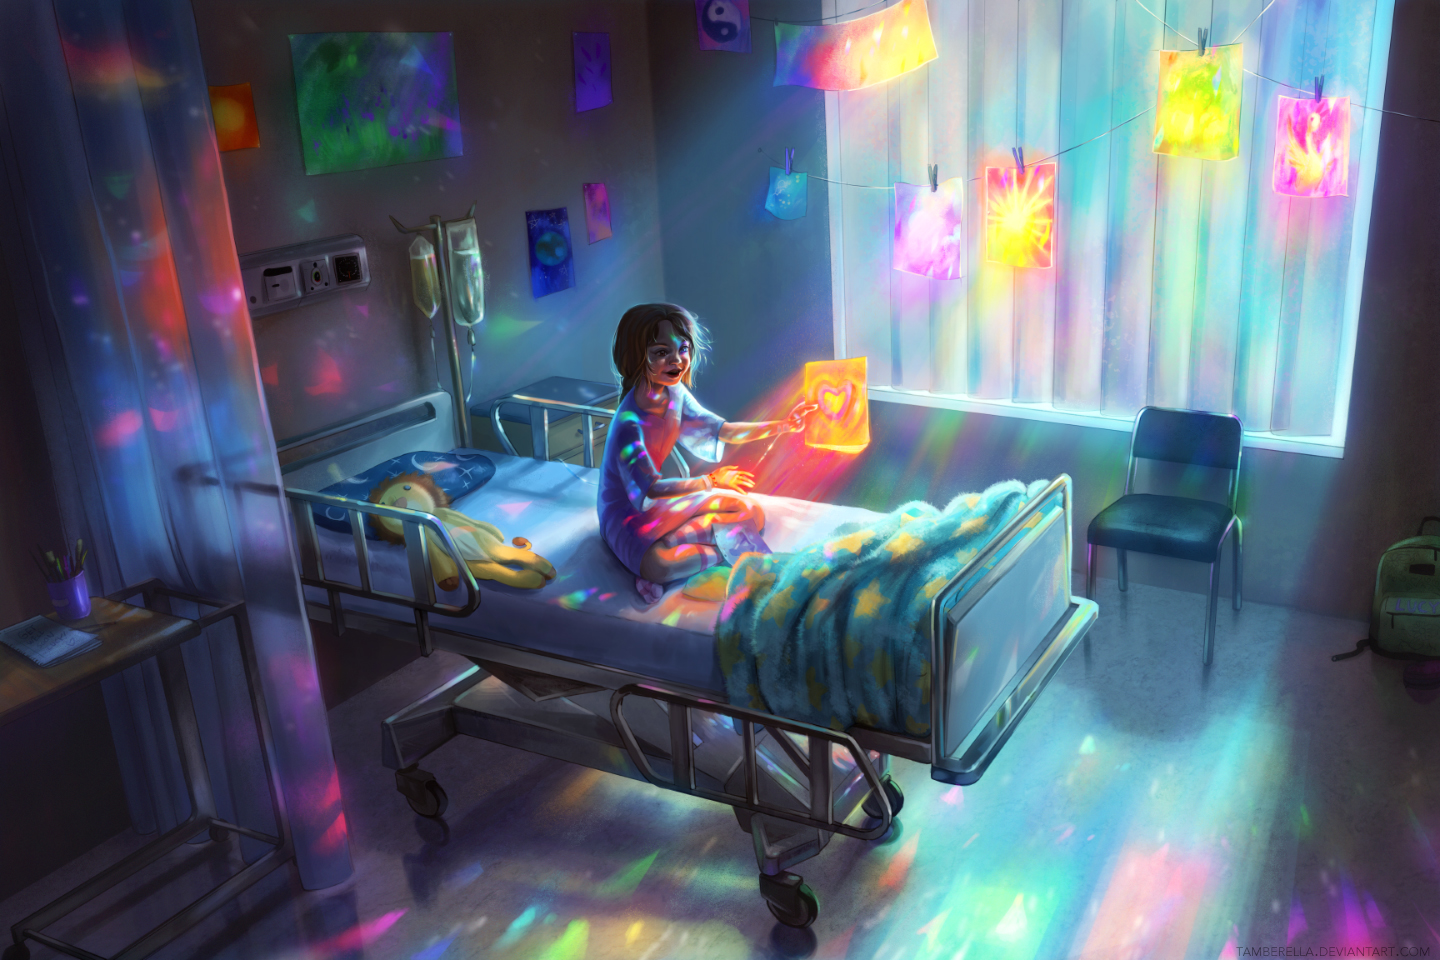 Anime 1440x960 hospital bed children artwork 2D emotion teddy bears digital art chair drawing heart colorful backpacks cyan